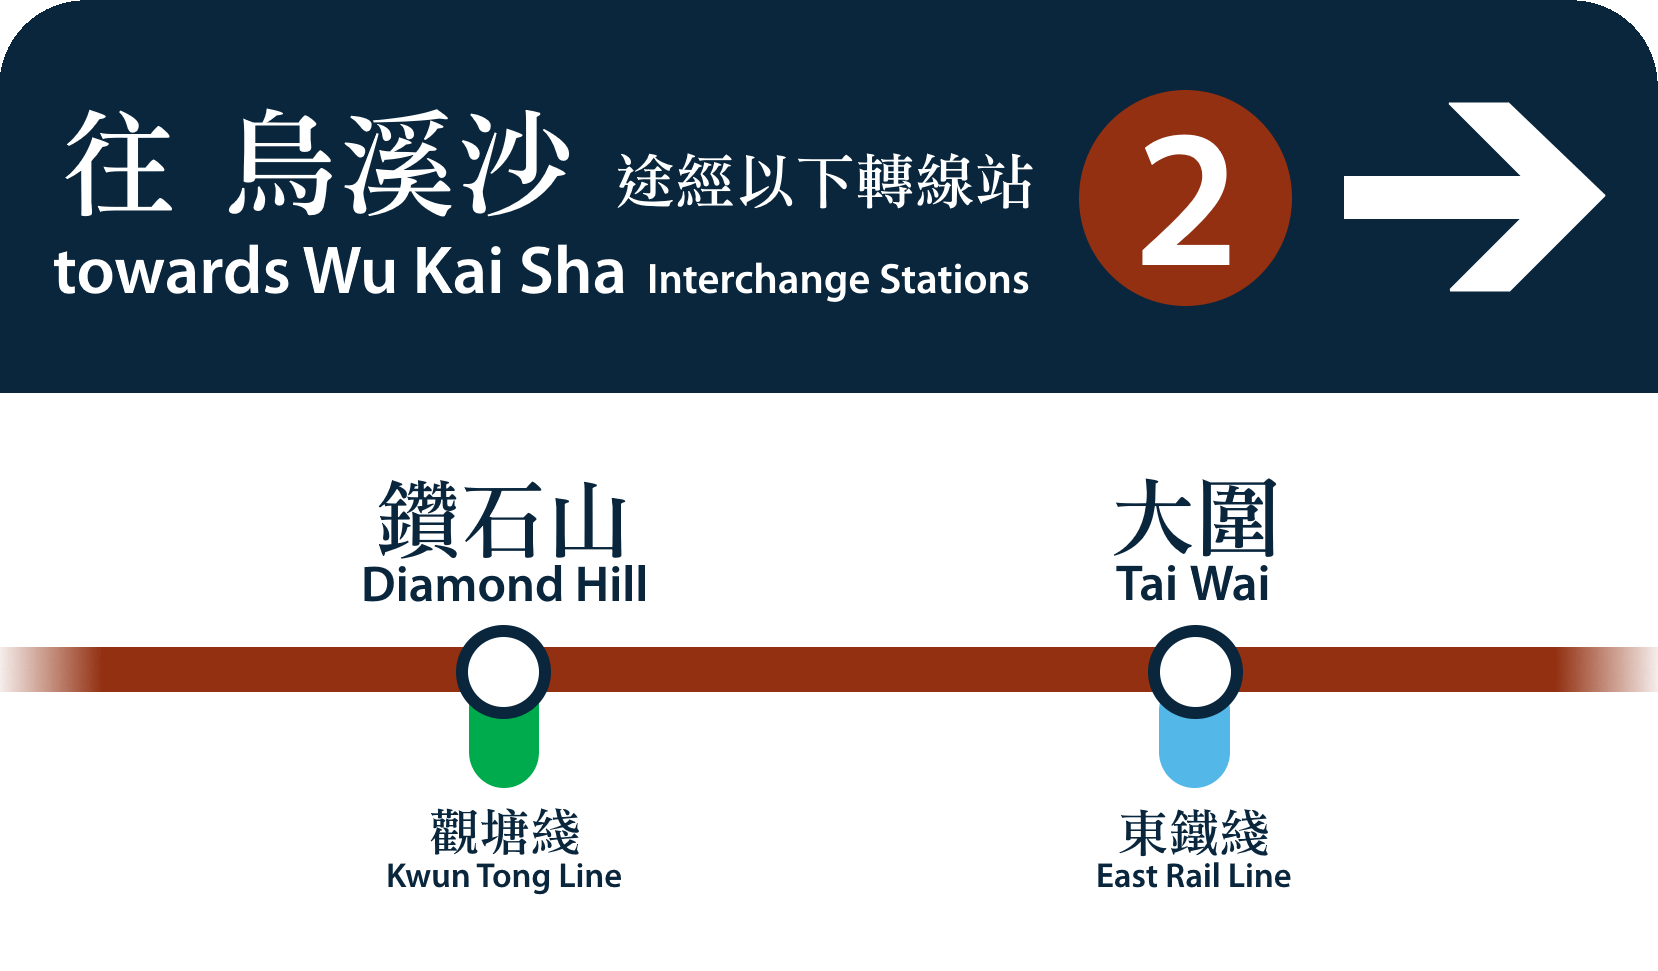 MTR signage at Sung Wong Toi Station: Listing interchange stations of the Tuen Ma Line towards Wu Kai Sha